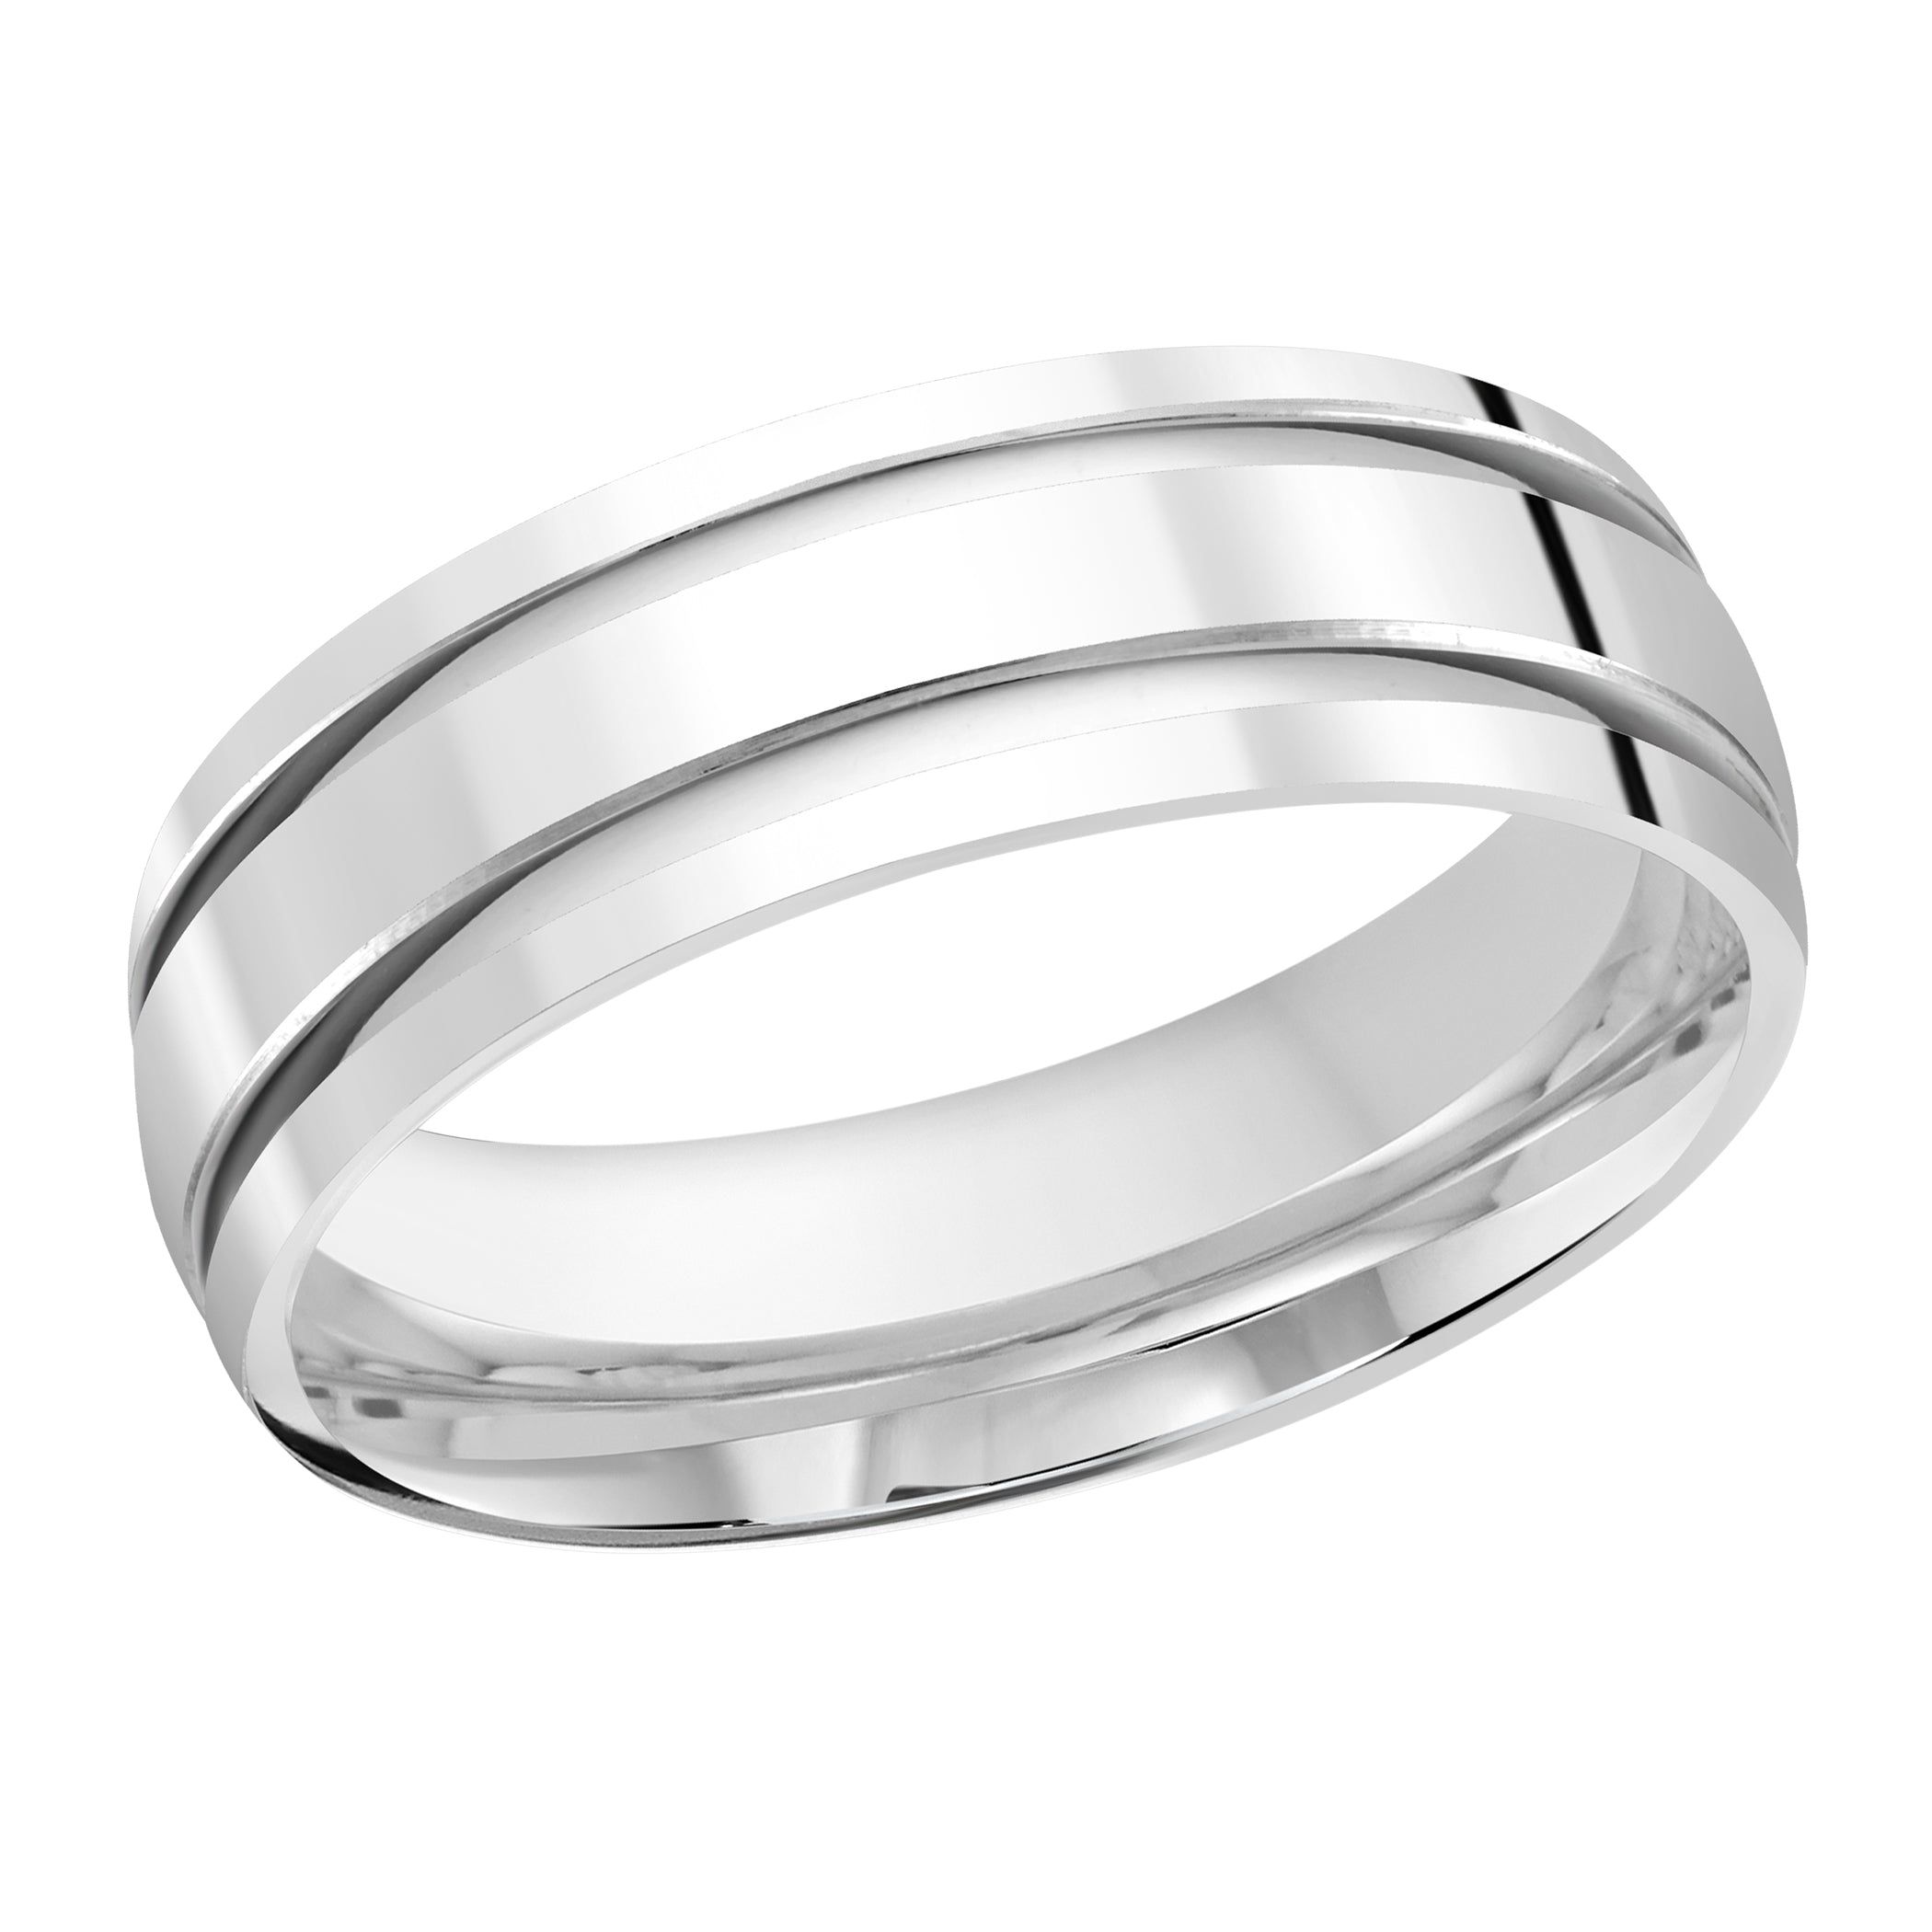 Men's 7mm Double Inlay High Polish Wedding Ring